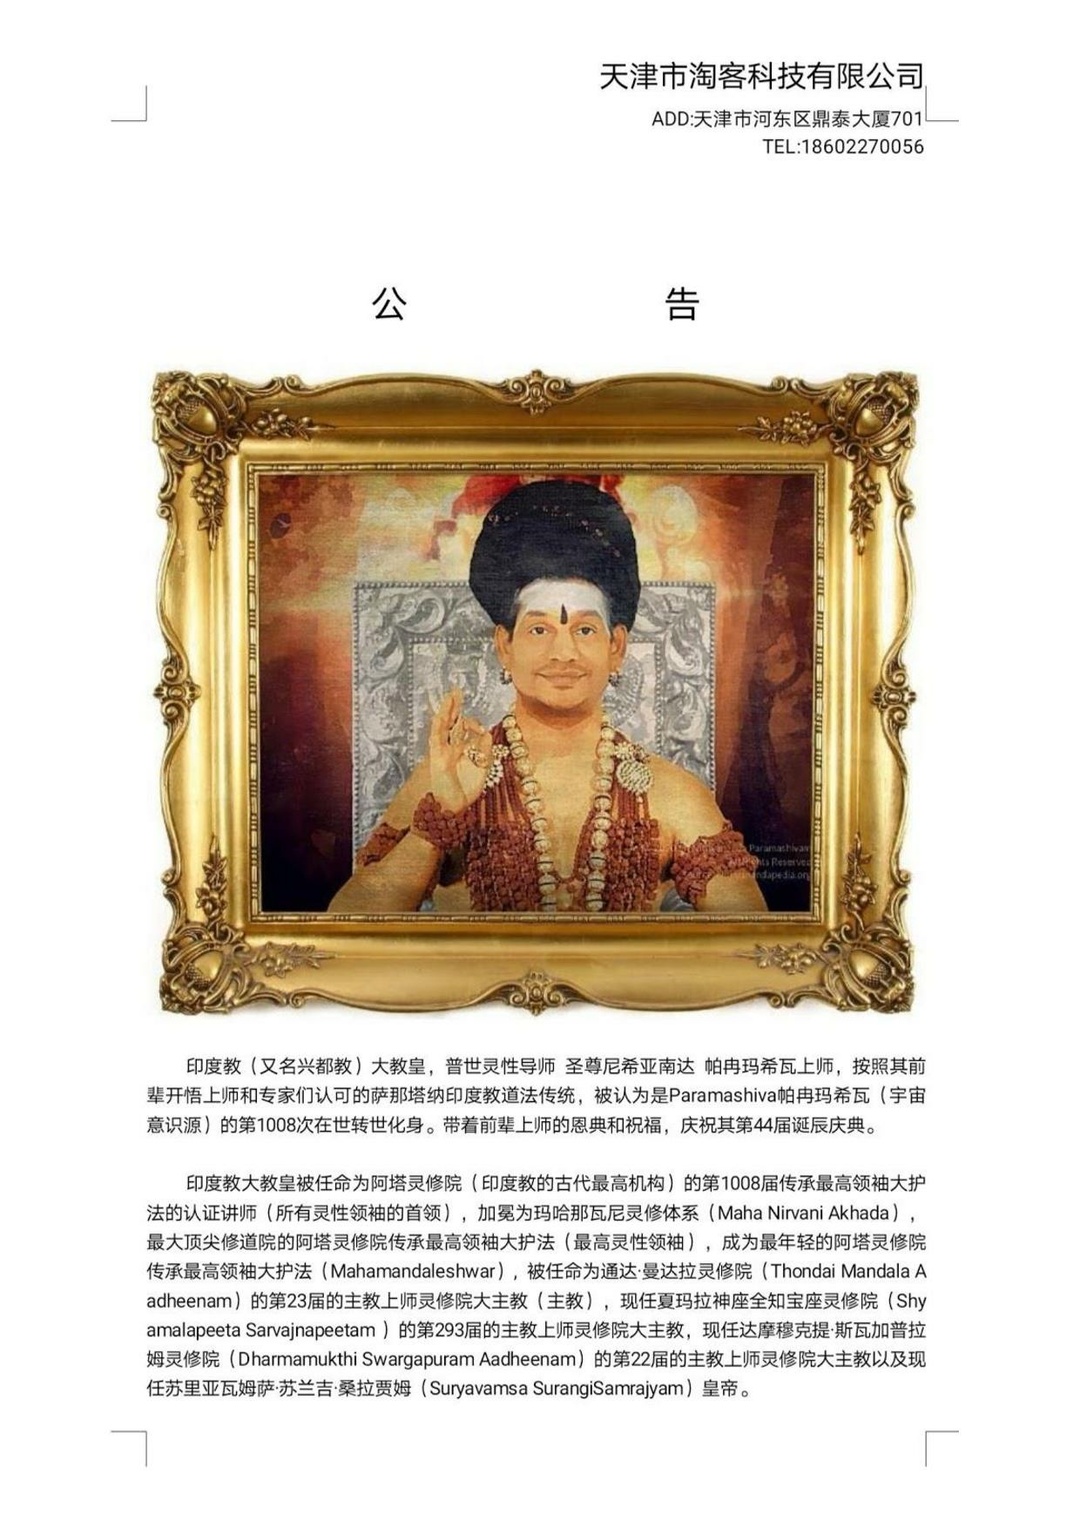 China---chang-song-Fu---6-Jan-2021-(Proclamation)-1K-CkD5AigtDYh-VUQCOSchSsgYwaXIrZ.pdf